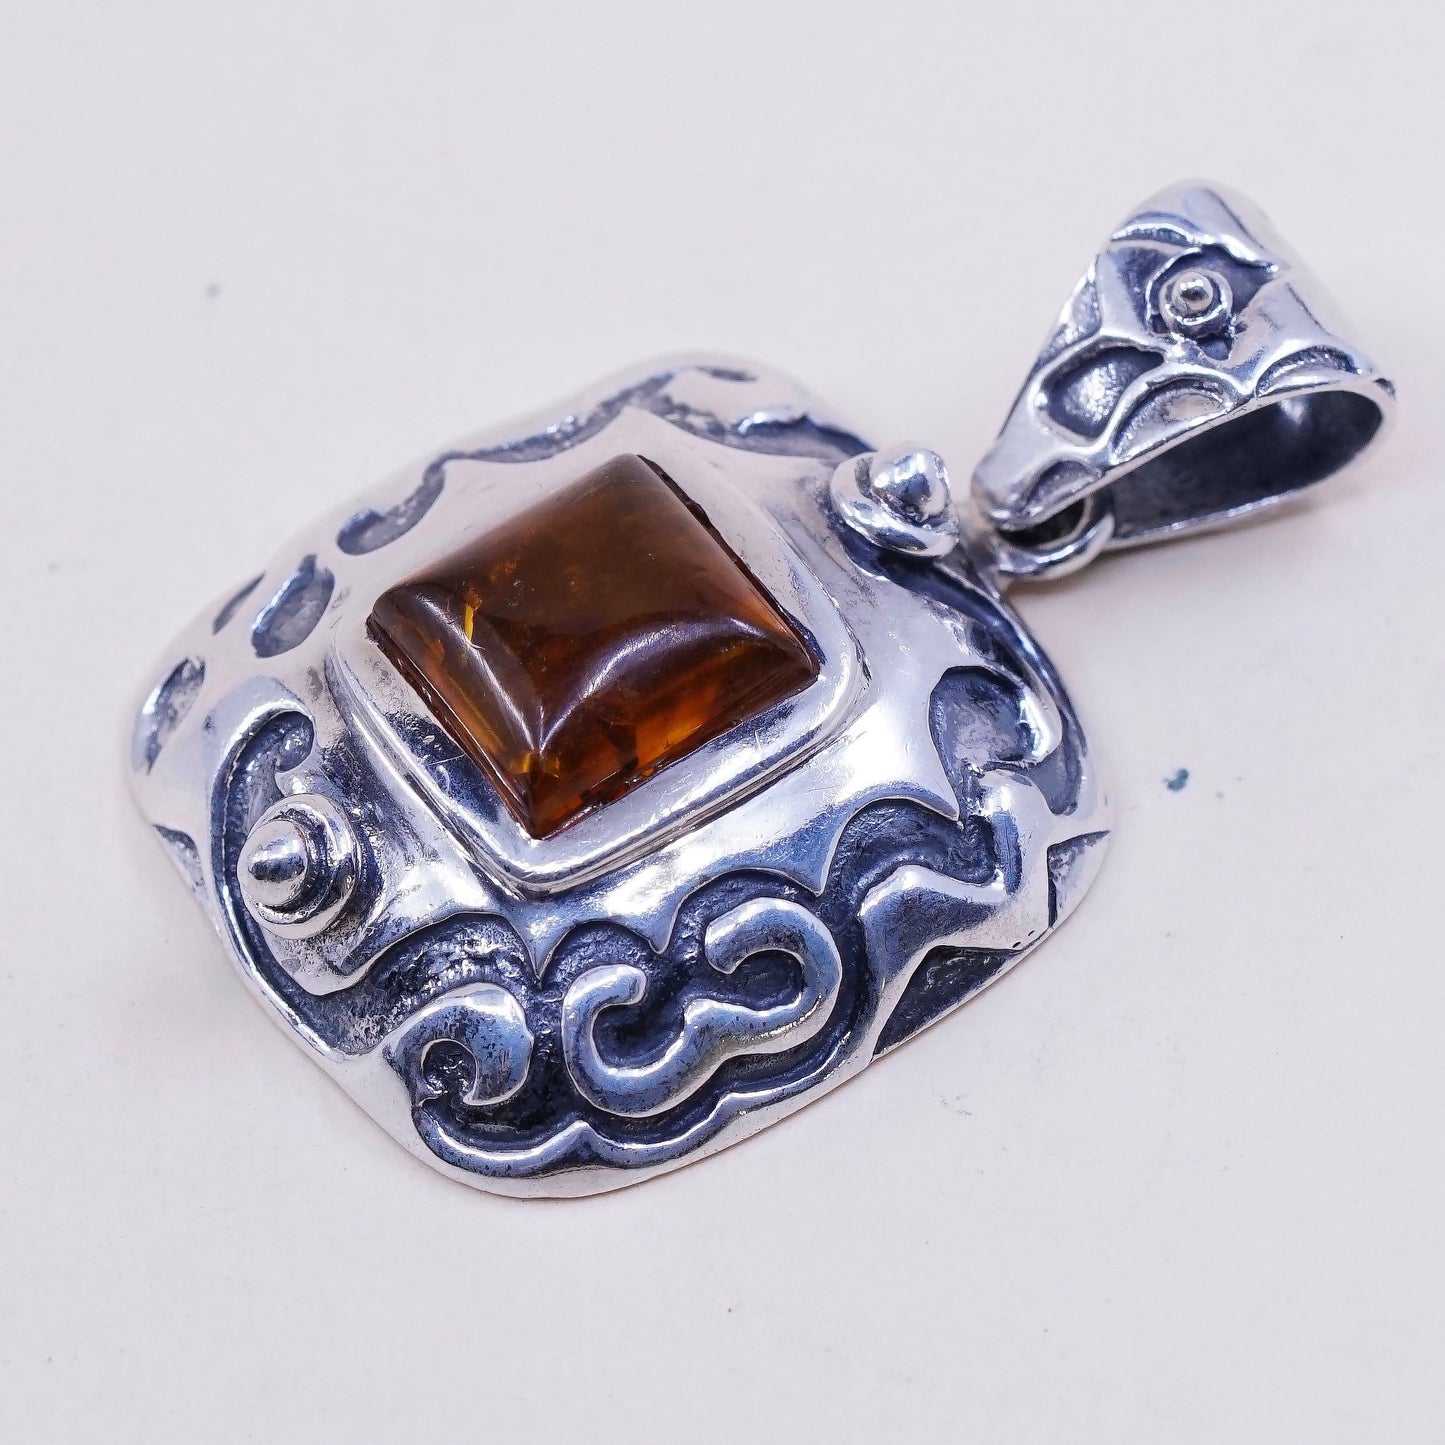 Vintage Silpada S0908 sterling 925 silver handmade bead pendant